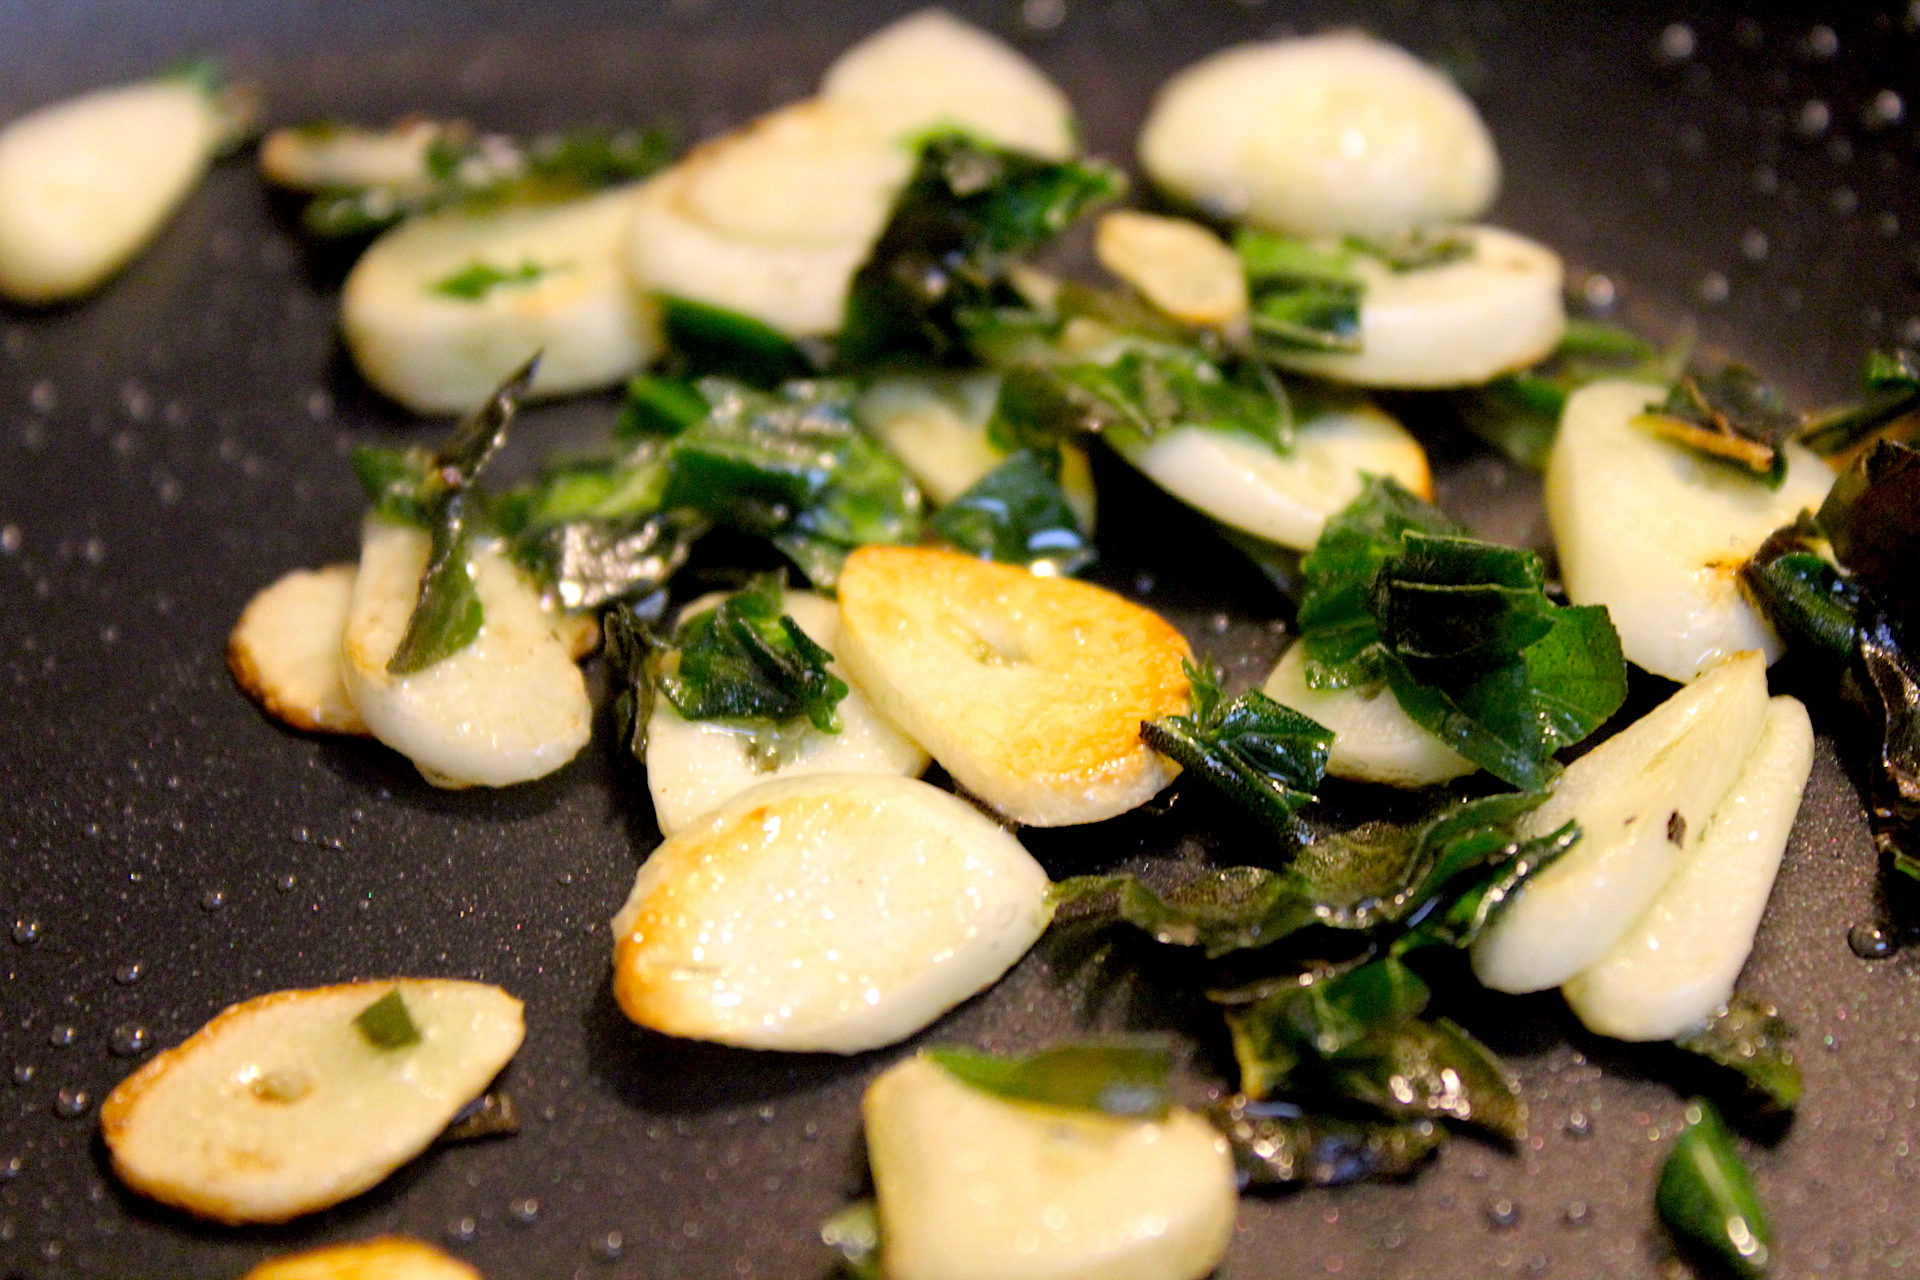 Cooking Garlic and Cannabis